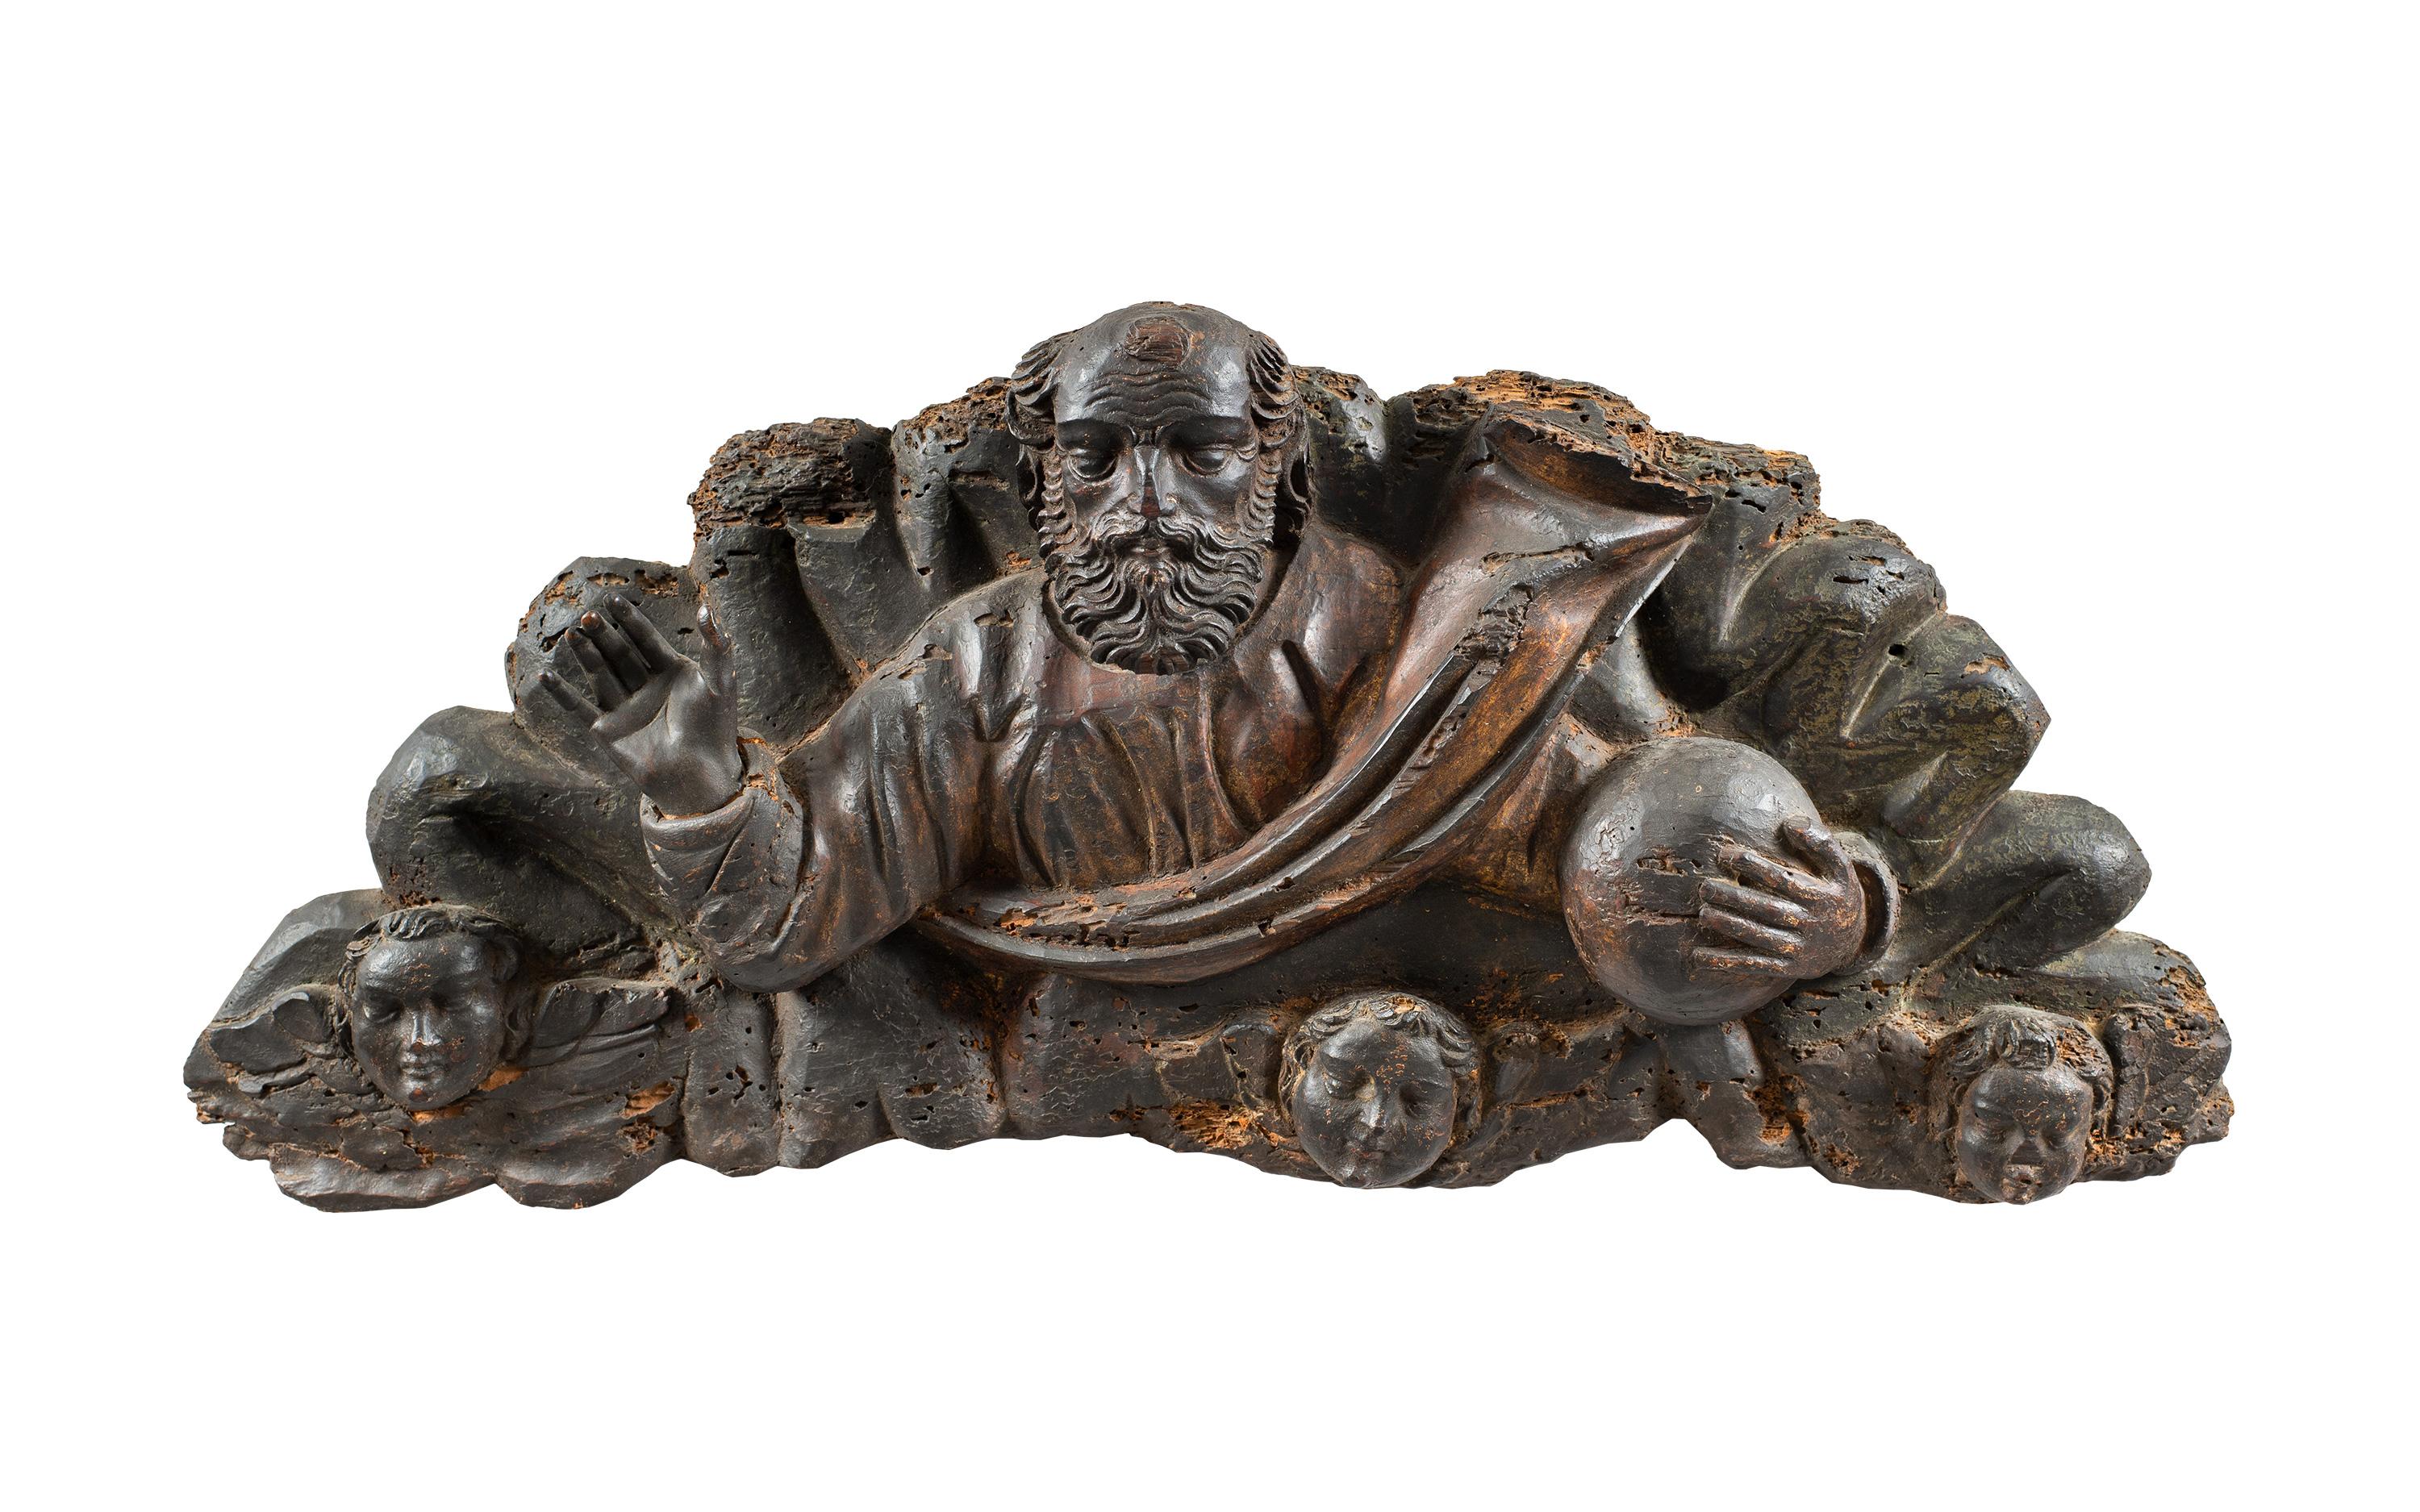 Unknown Figurative Sculpture - Baroque Italian Sculptor - 17th century carved wood sculpture - God father